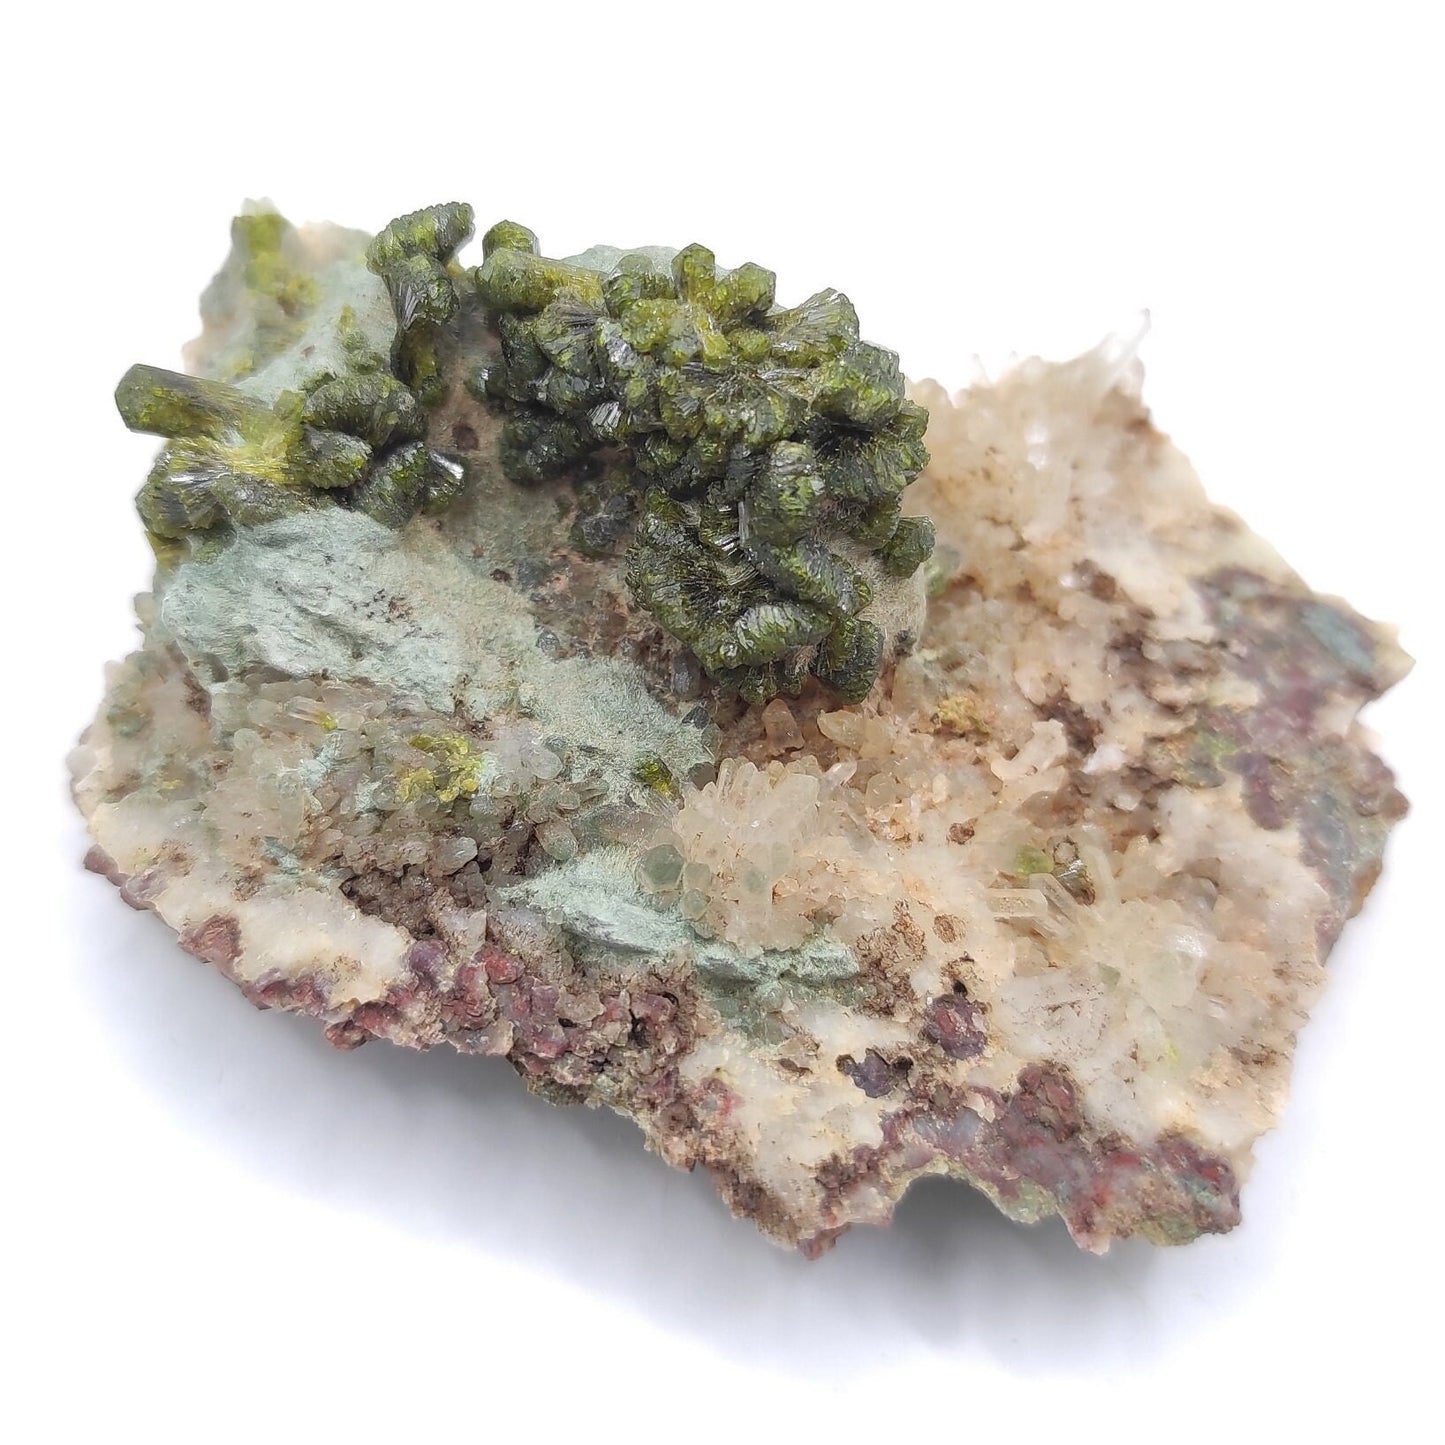 62g Epidote with Quartz - Imilchil, Morocco - Green Epidote Crystal Cluster - Raw Mineral Specimen - Green Epidote and Quartz Crystal